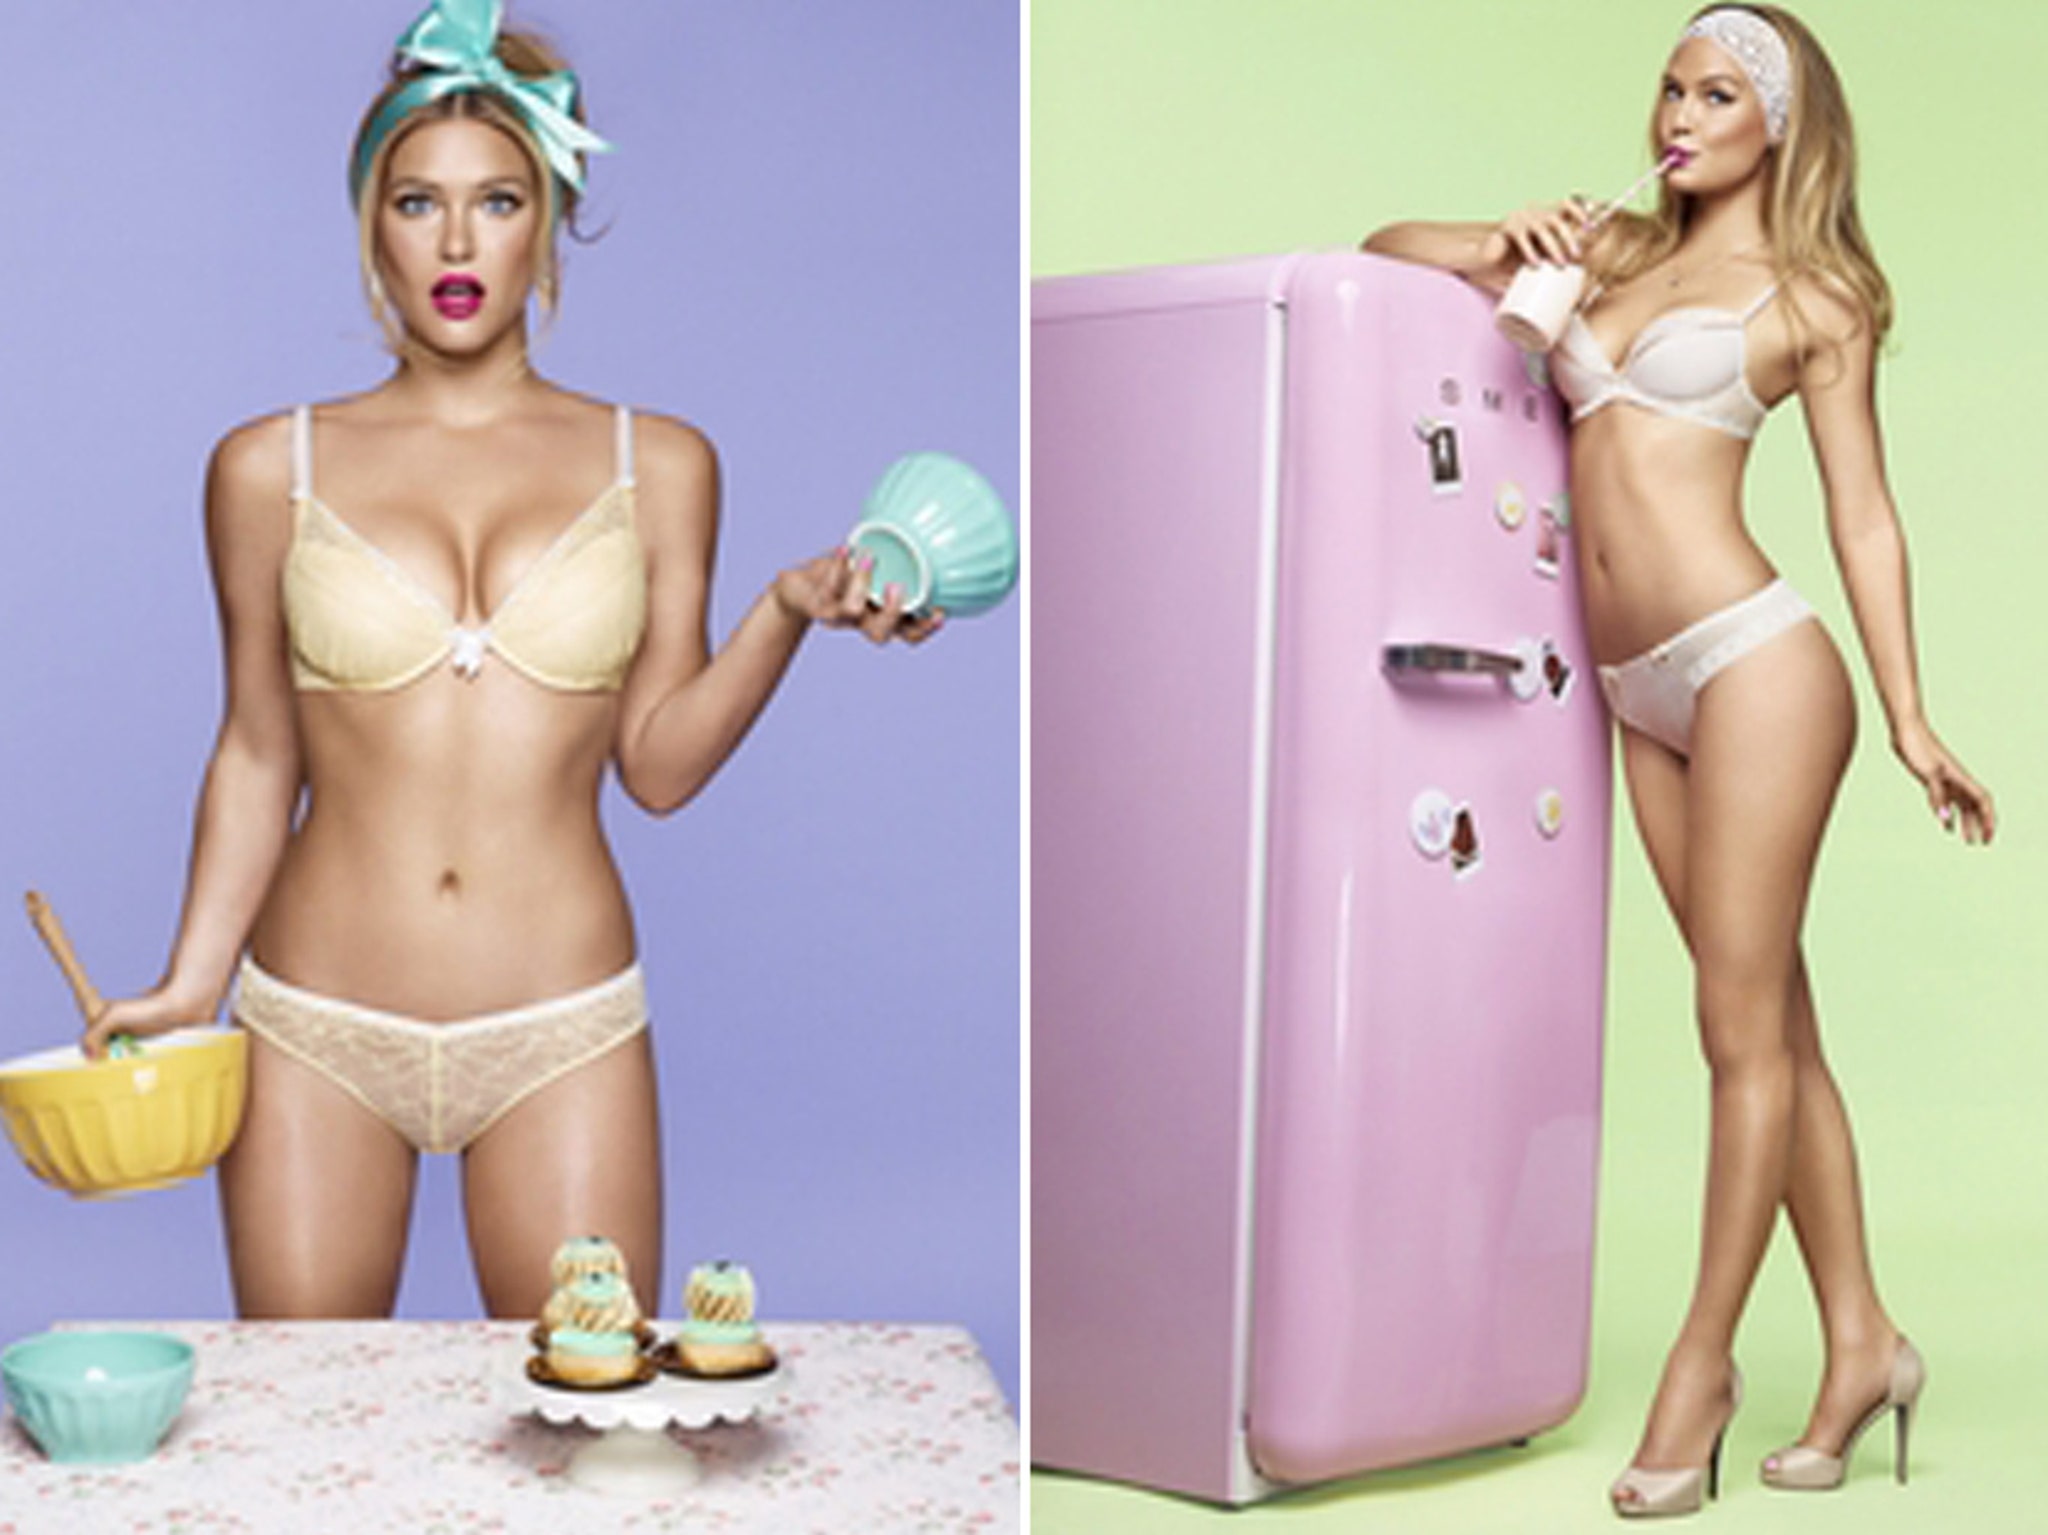 Bar Refaeli Underwear Commercial Shows Off Model's Under.me Men's